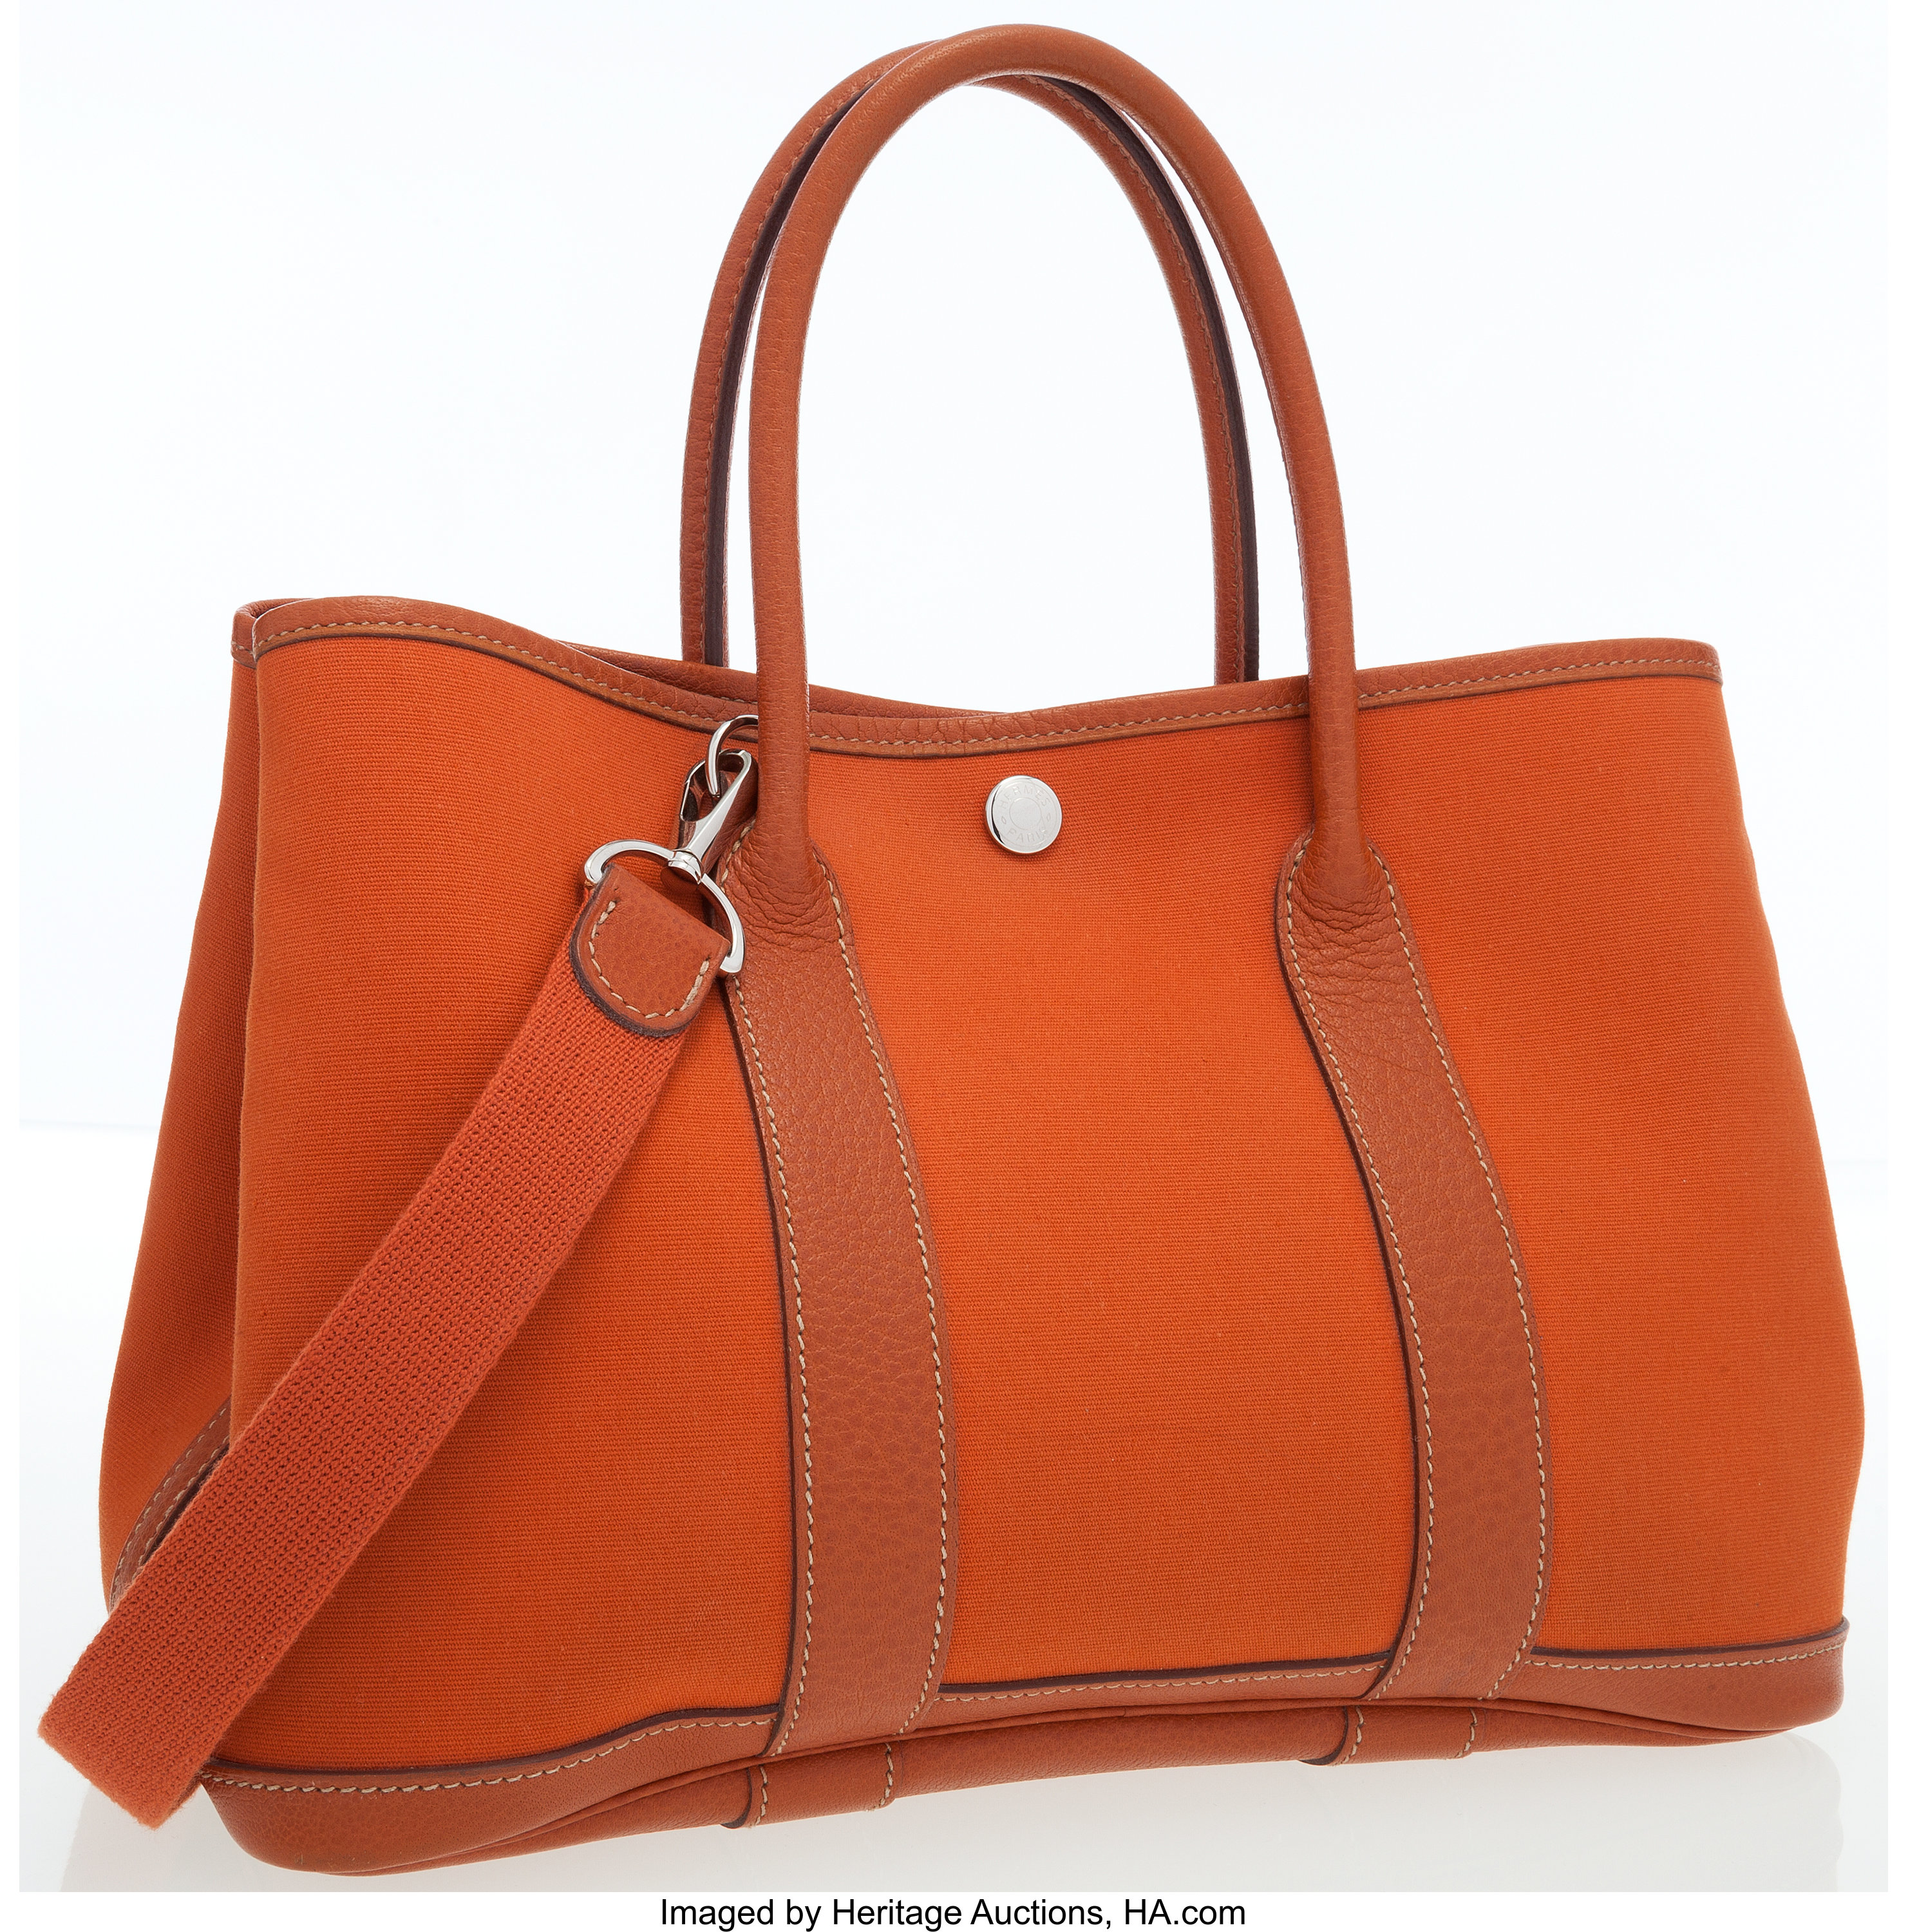 Hermes, Bags, Authentic Hermes Garden Party Tpm Handbag